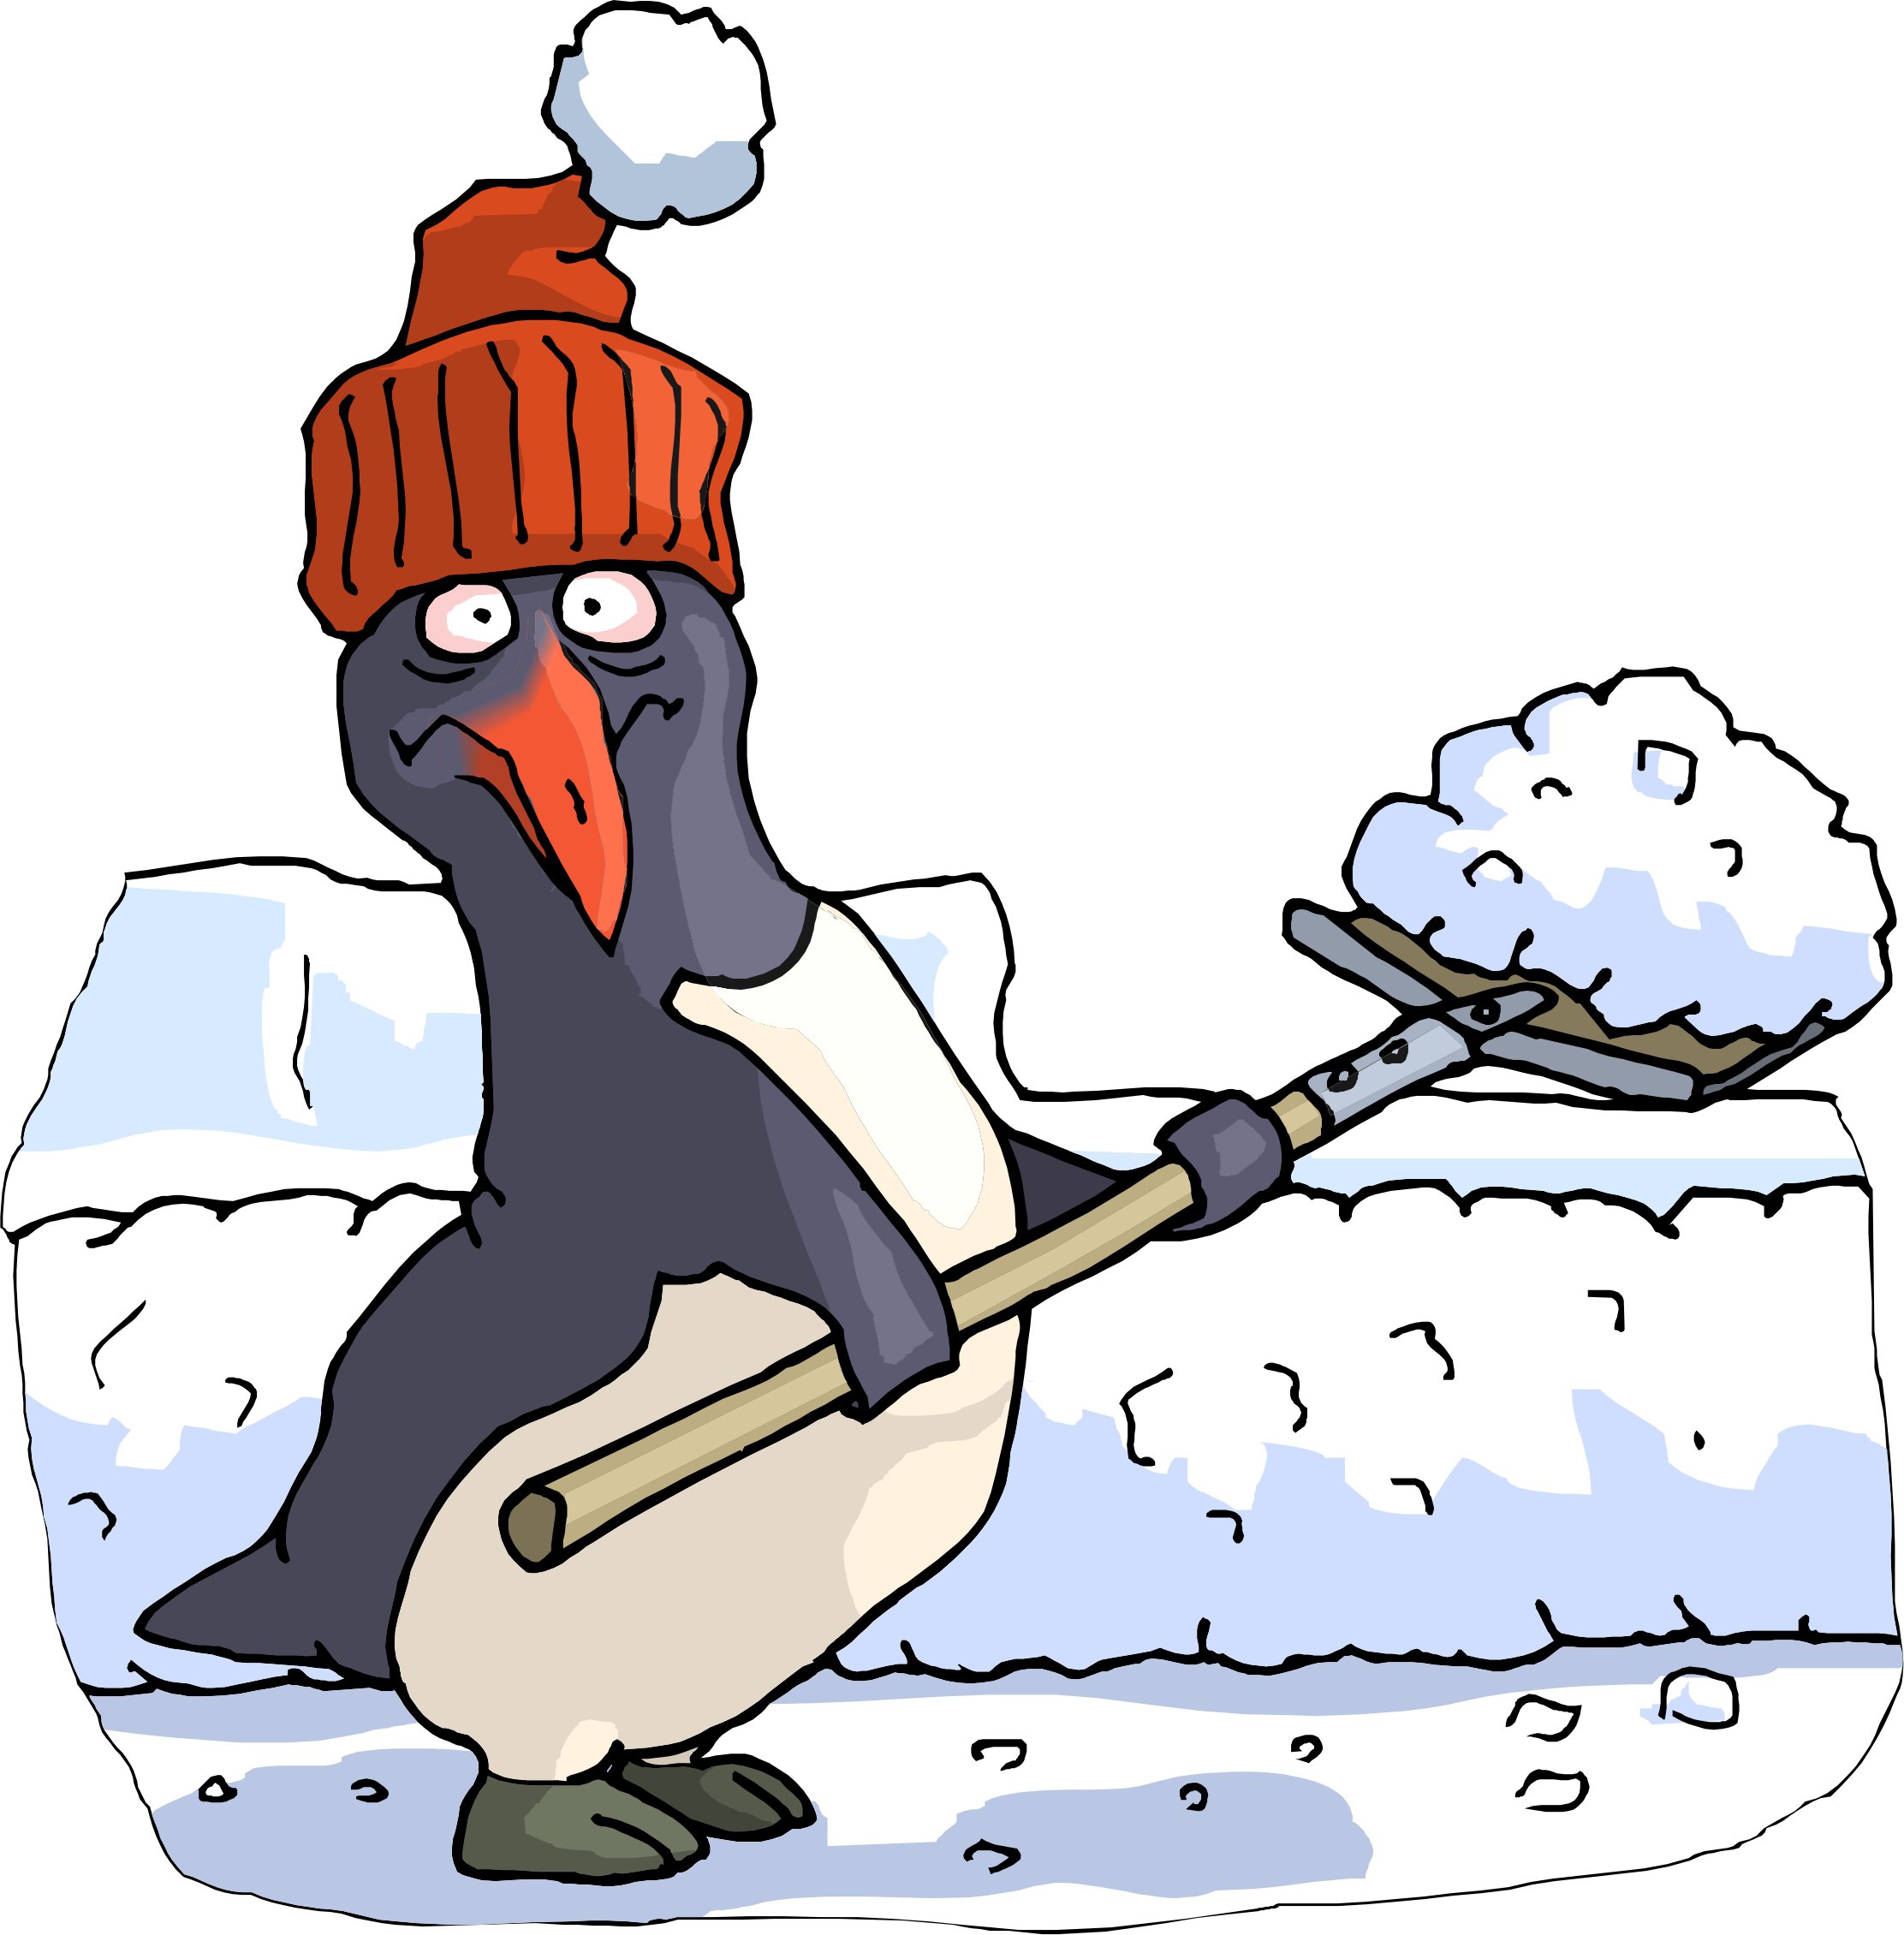 Free clipart cartoon image of man shoveling snow - ClipartFox